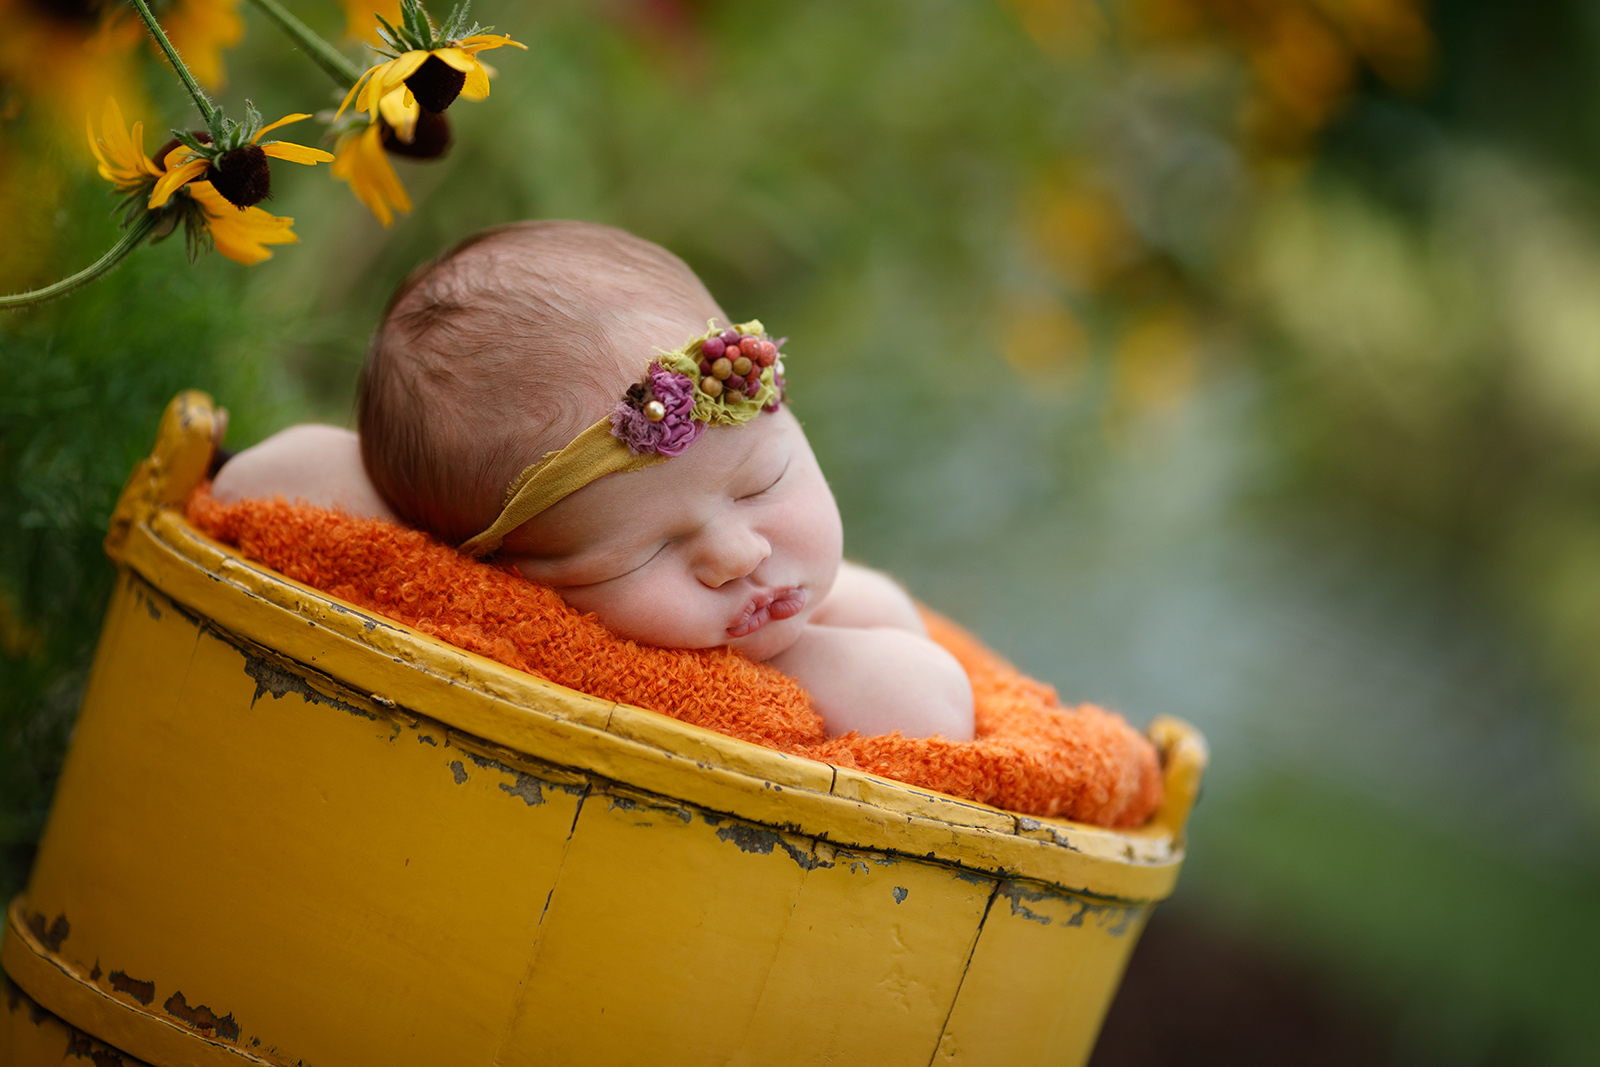 newborn portrait baby in yellow bucket with yellow flowers  bokeh